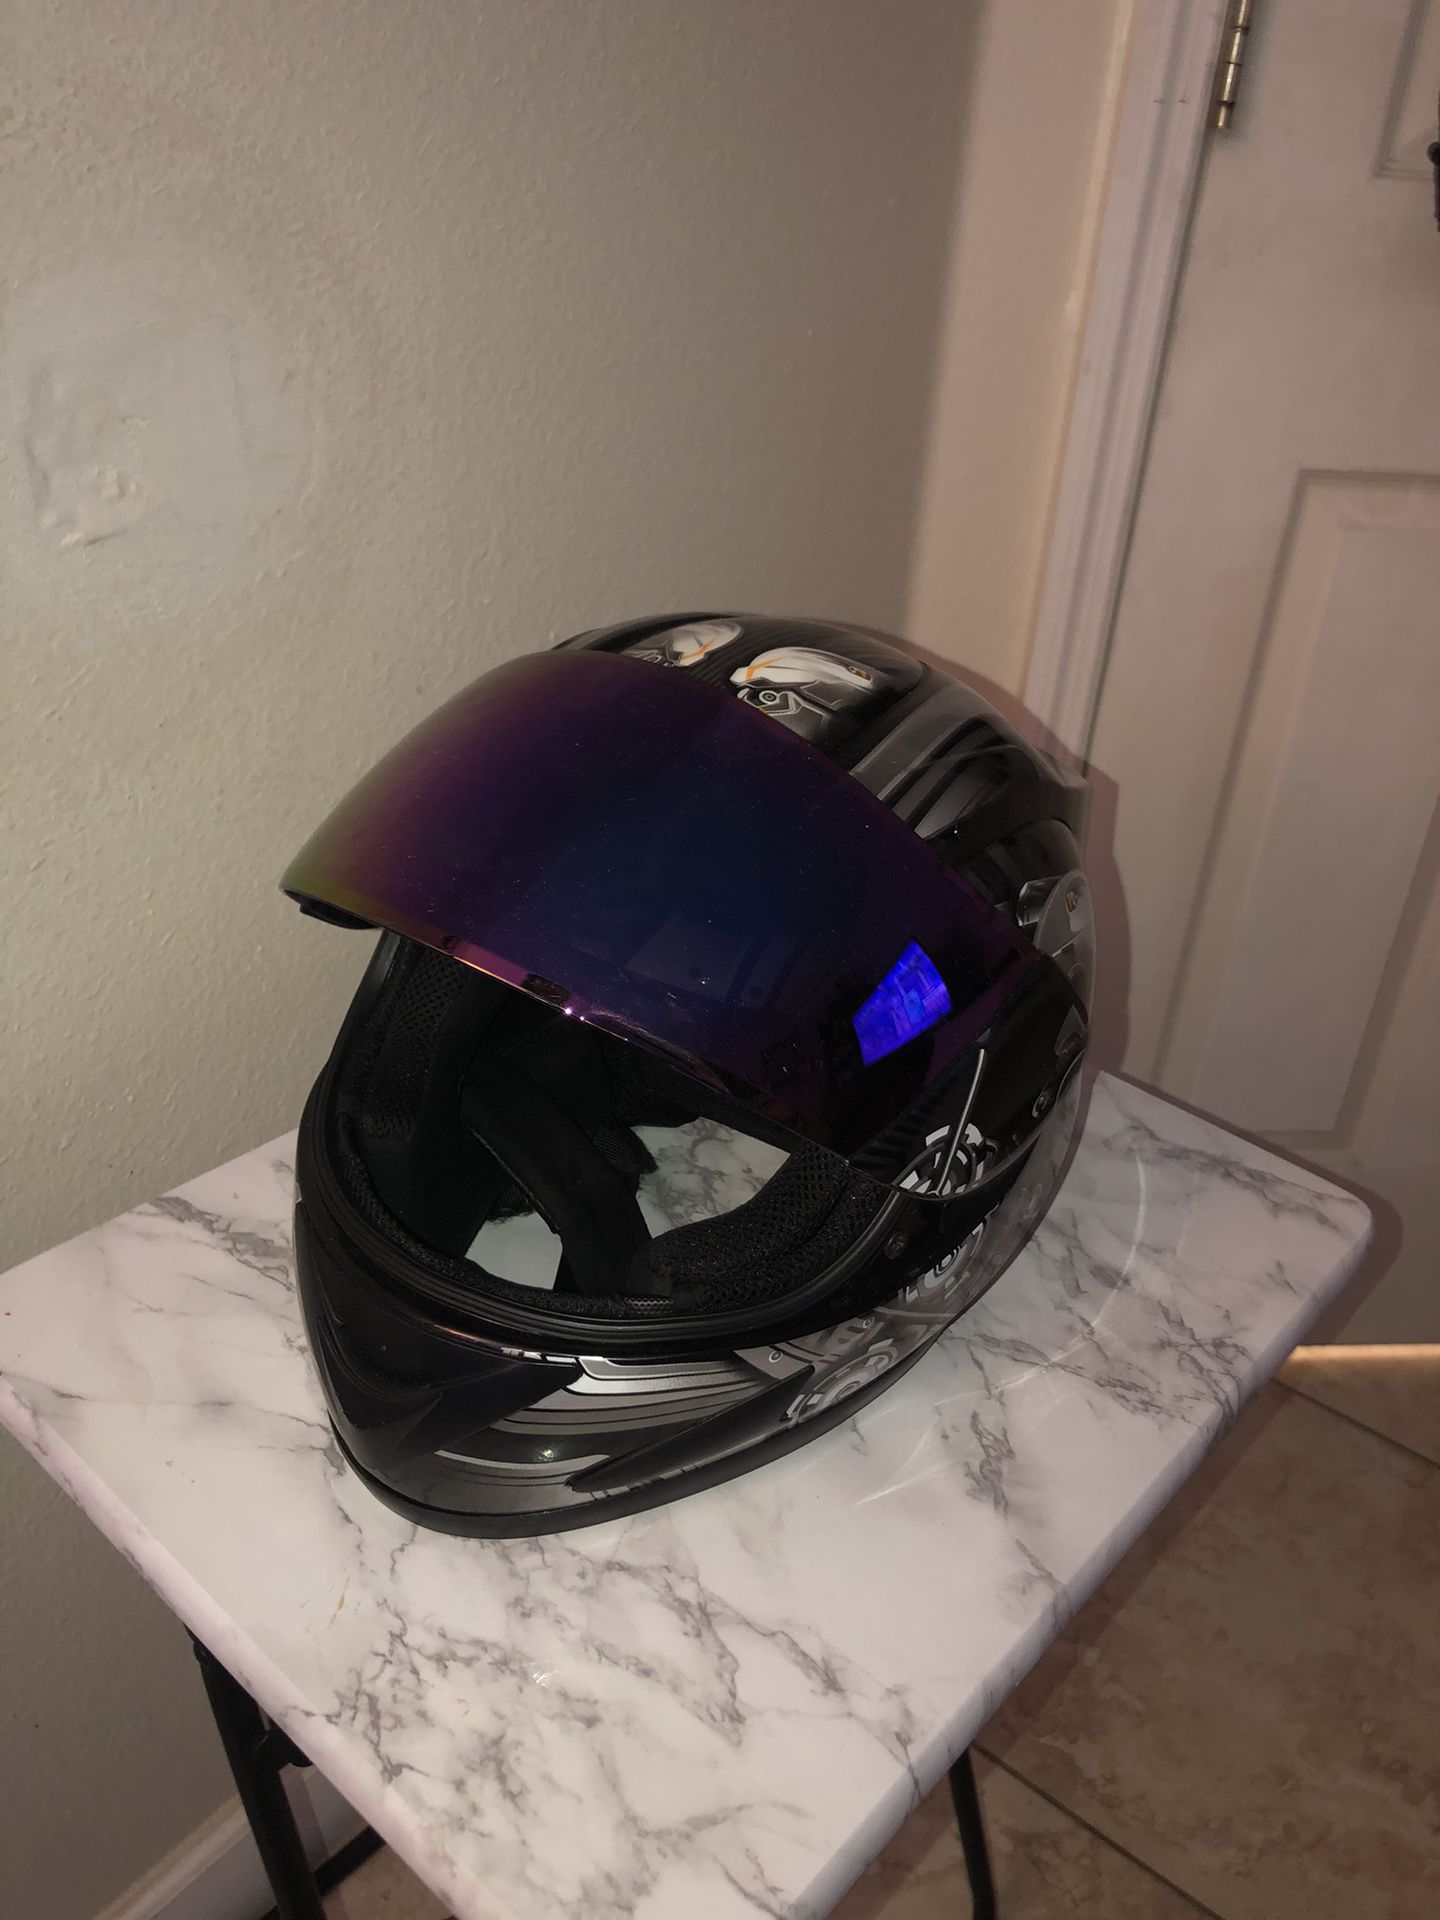 1storm Motorcycle Helmet 